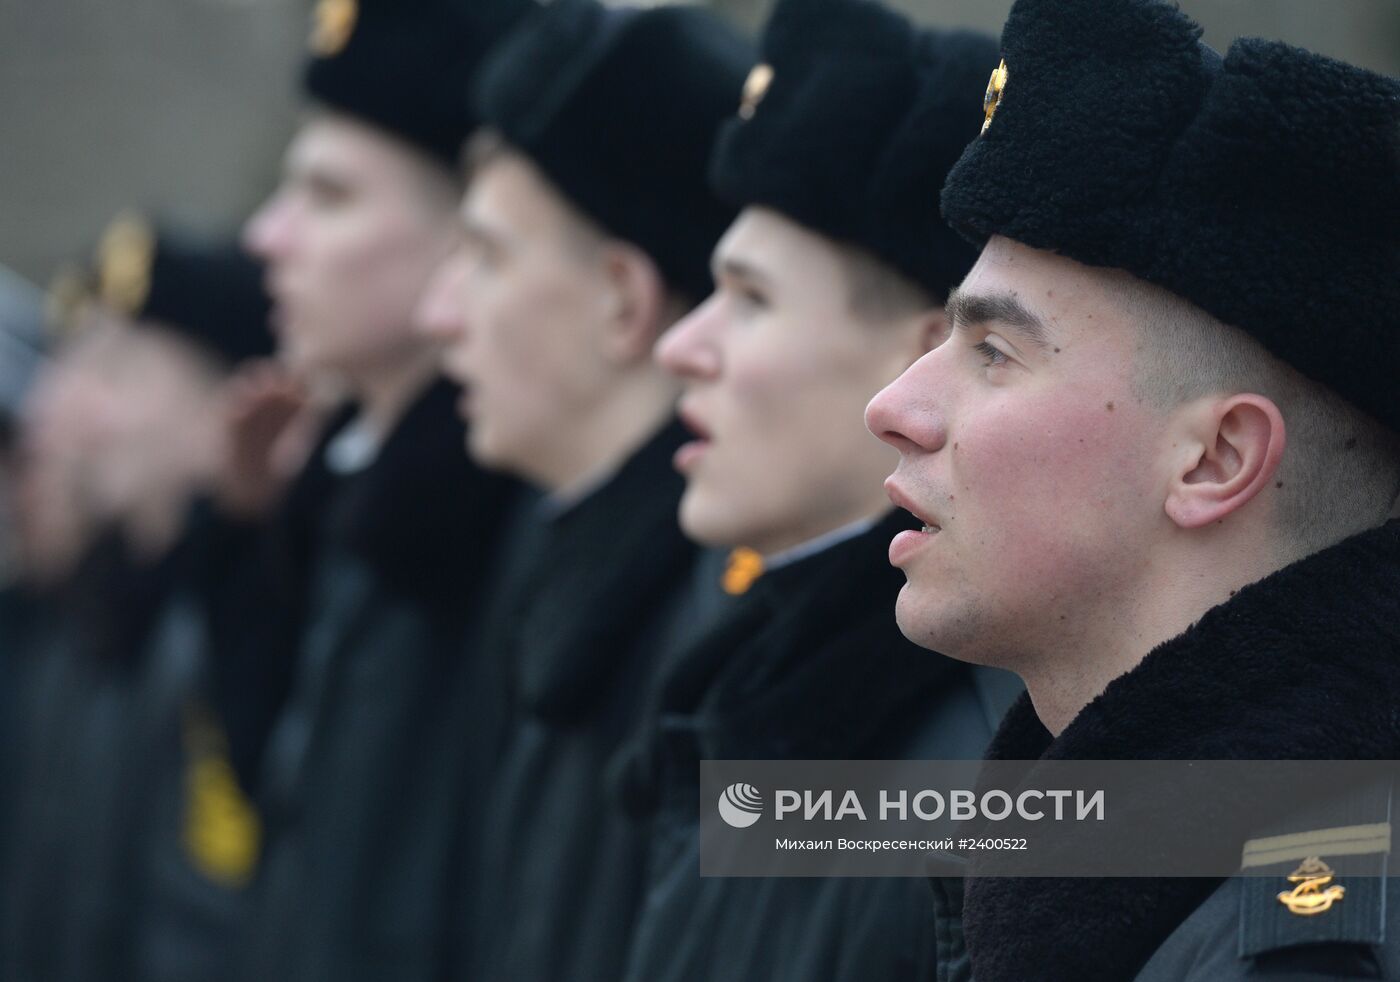 Церемония поднятия российского флага в академии ВМС им. Нахимова в Севастополе